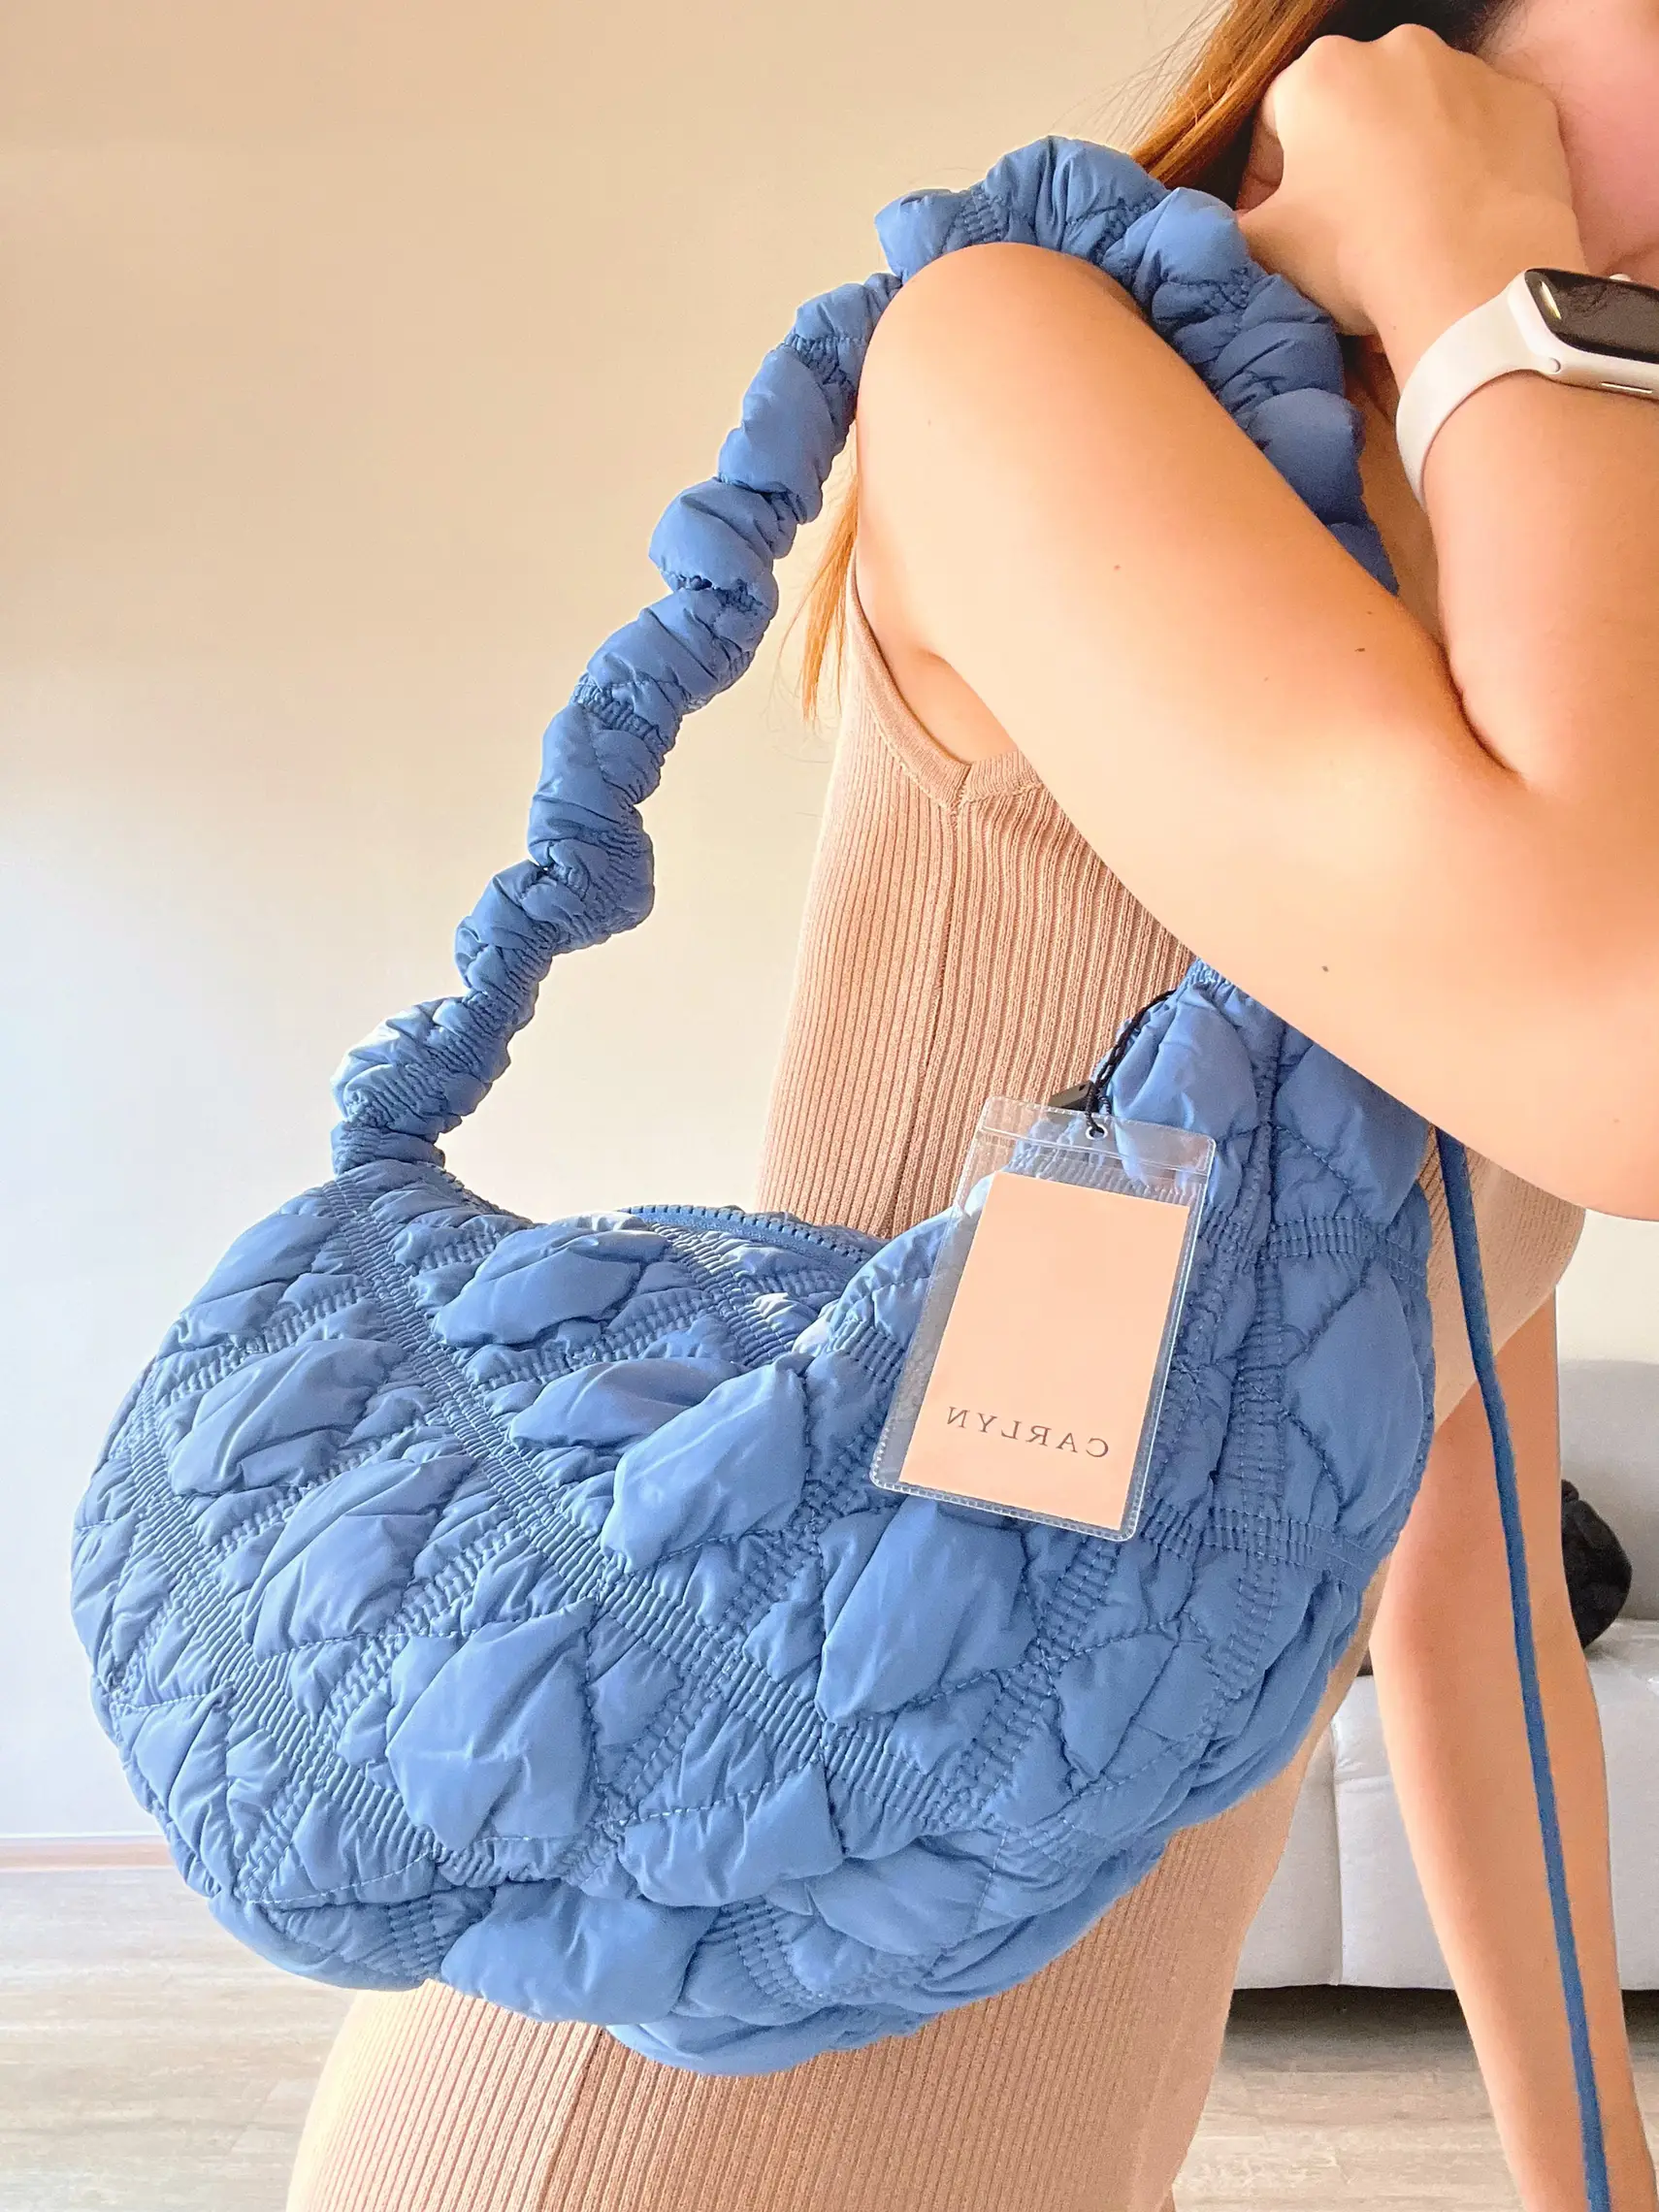 Louis Vuitton croisette review*wear/tear *what fits inside this bag 